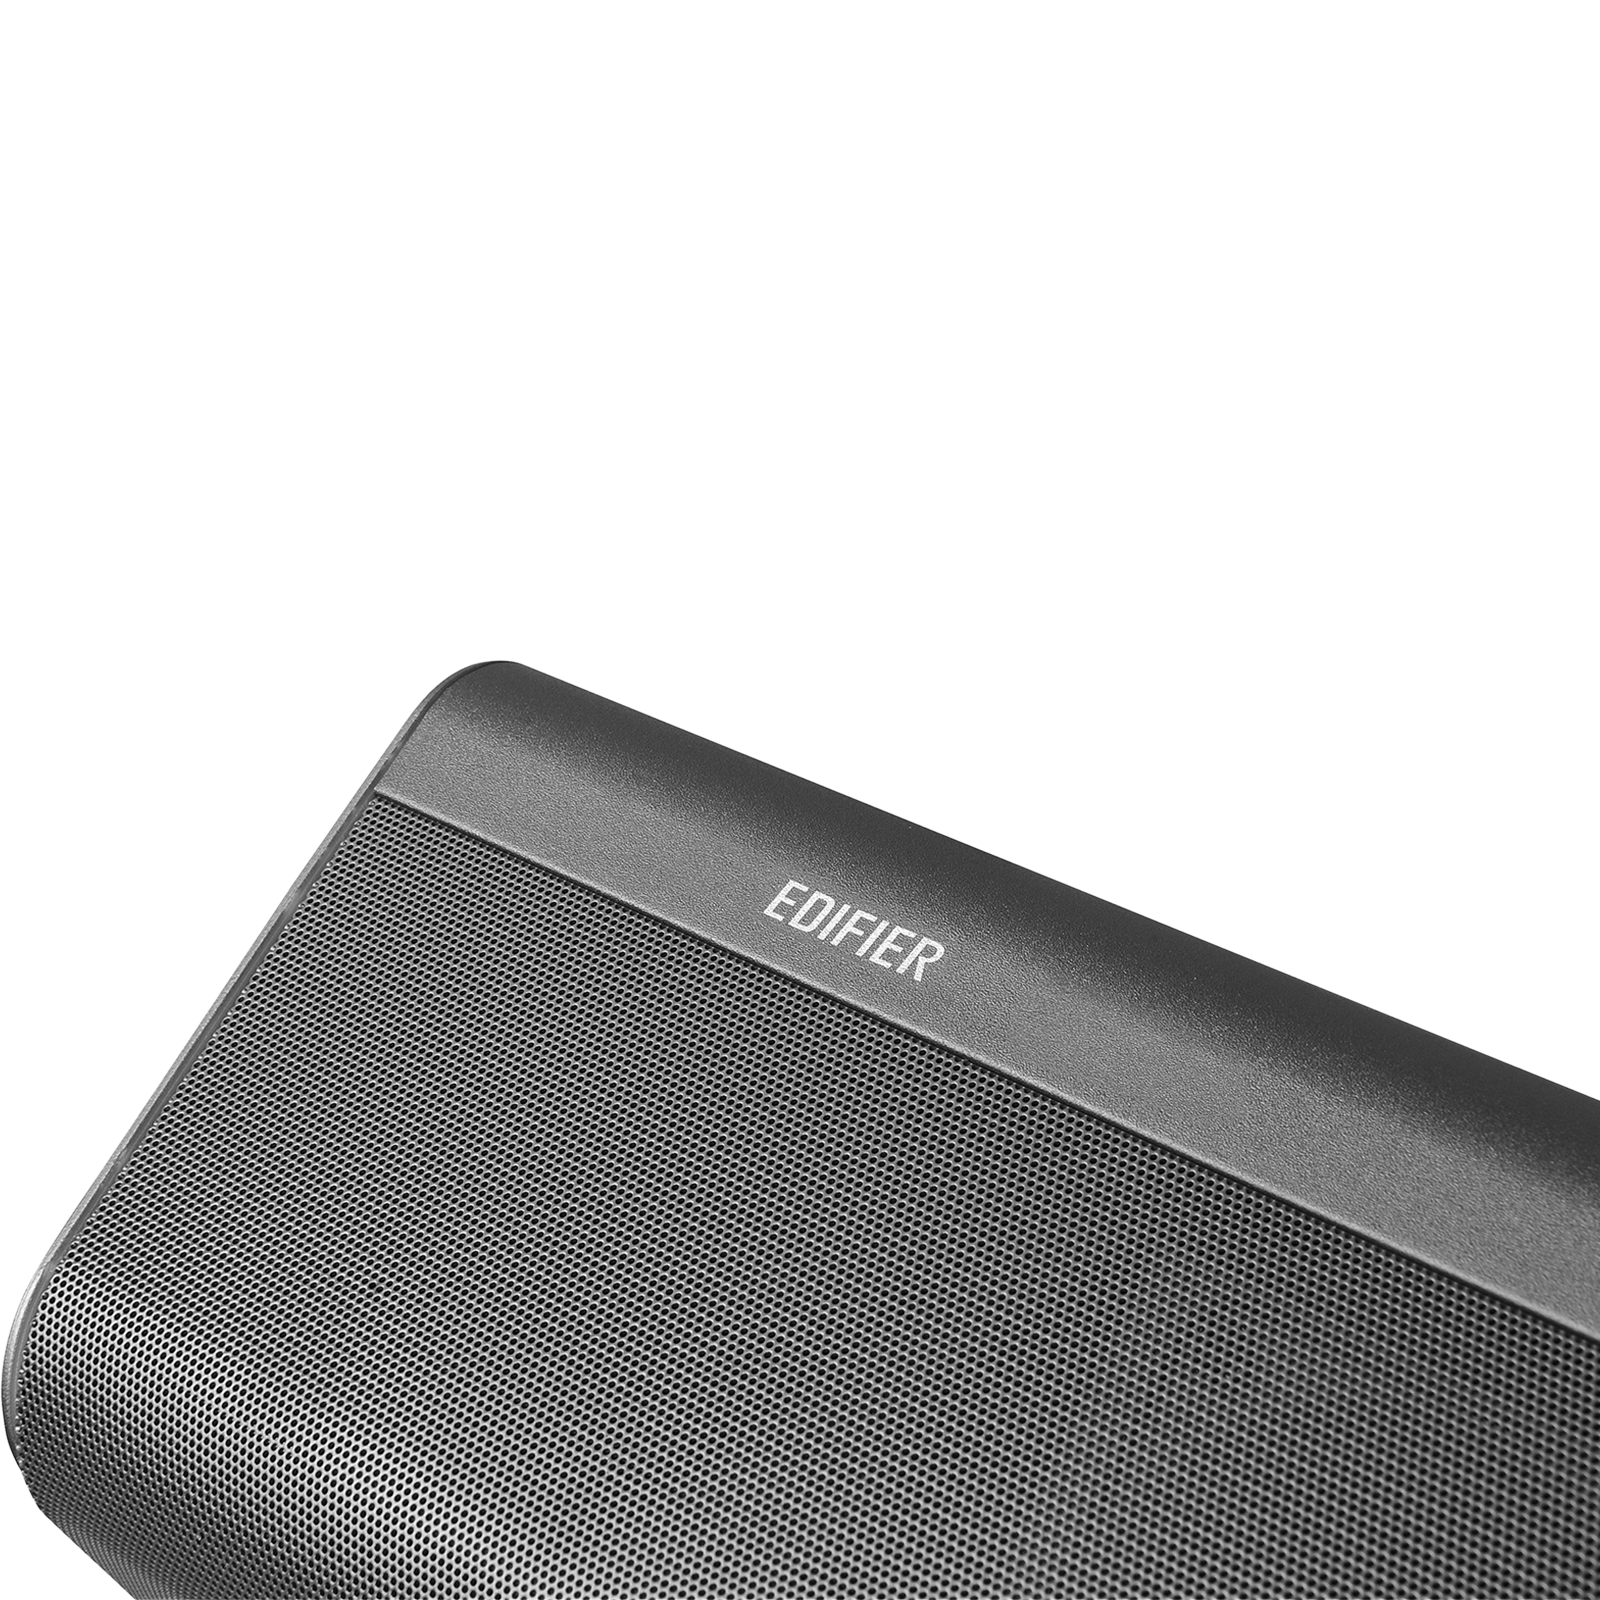 B700 Dolby Atmos® Speaker System - 5.1.2 Soundbar with Wireless Subwoofer